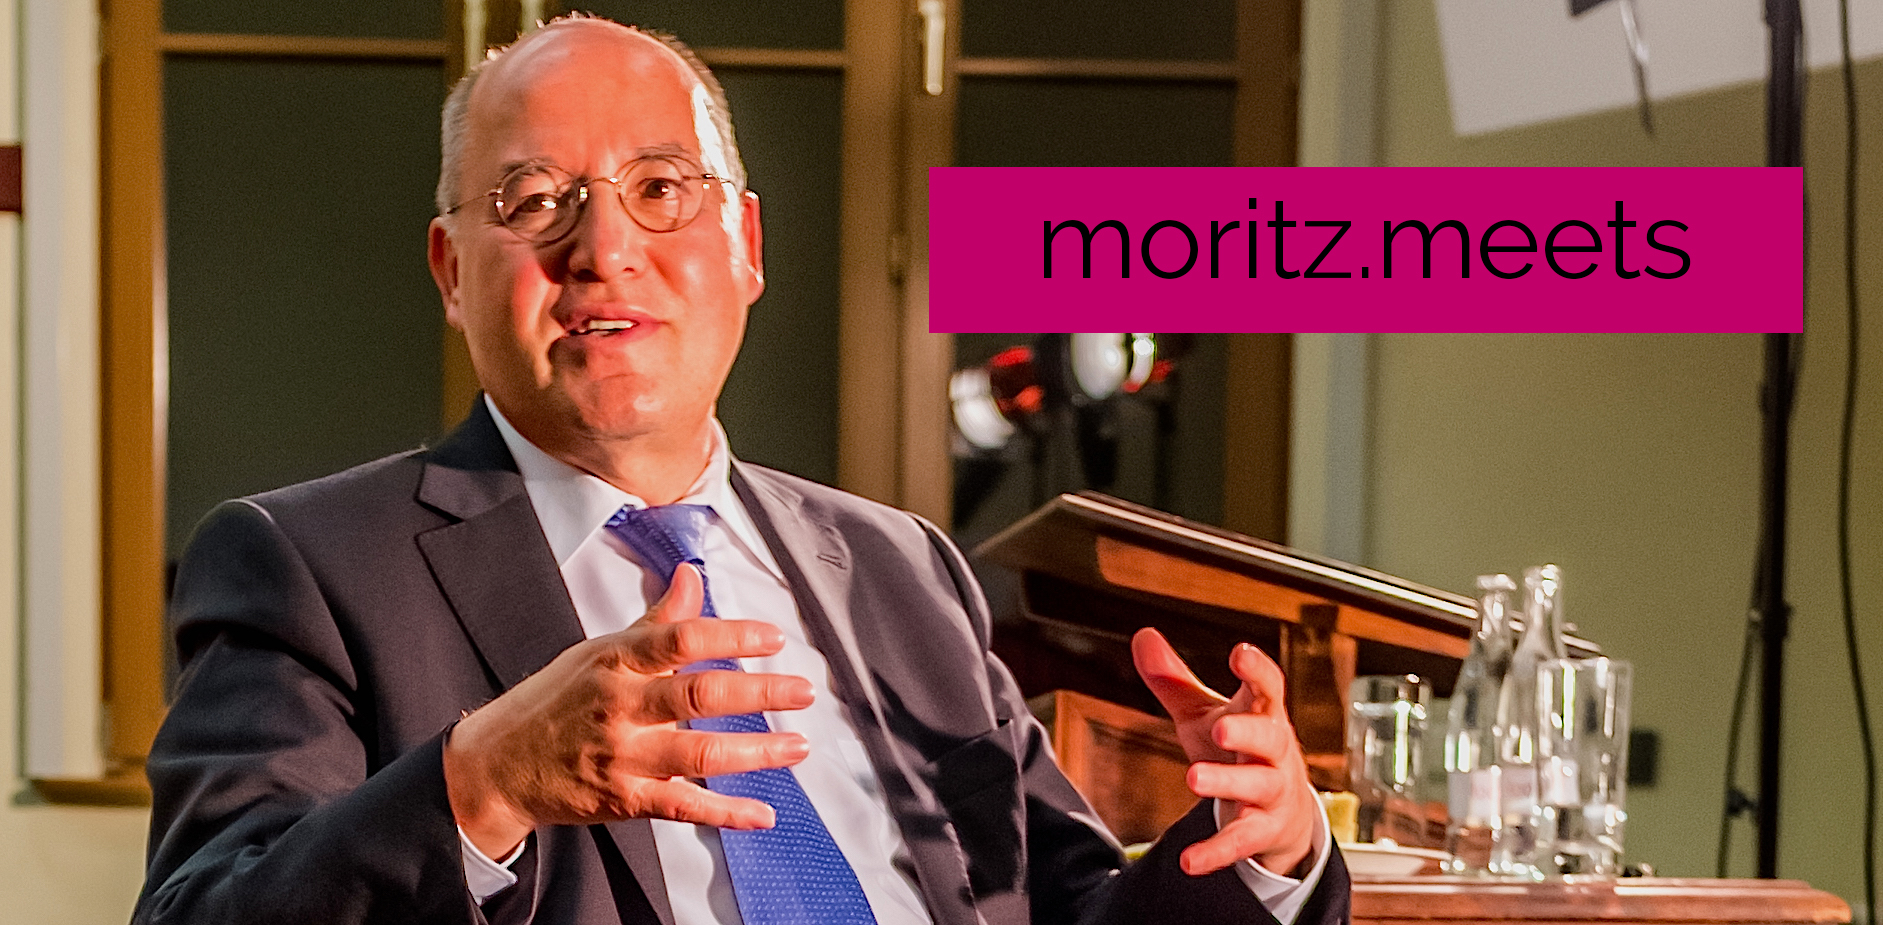 moritz.meets – Dr. Gregor Gysi